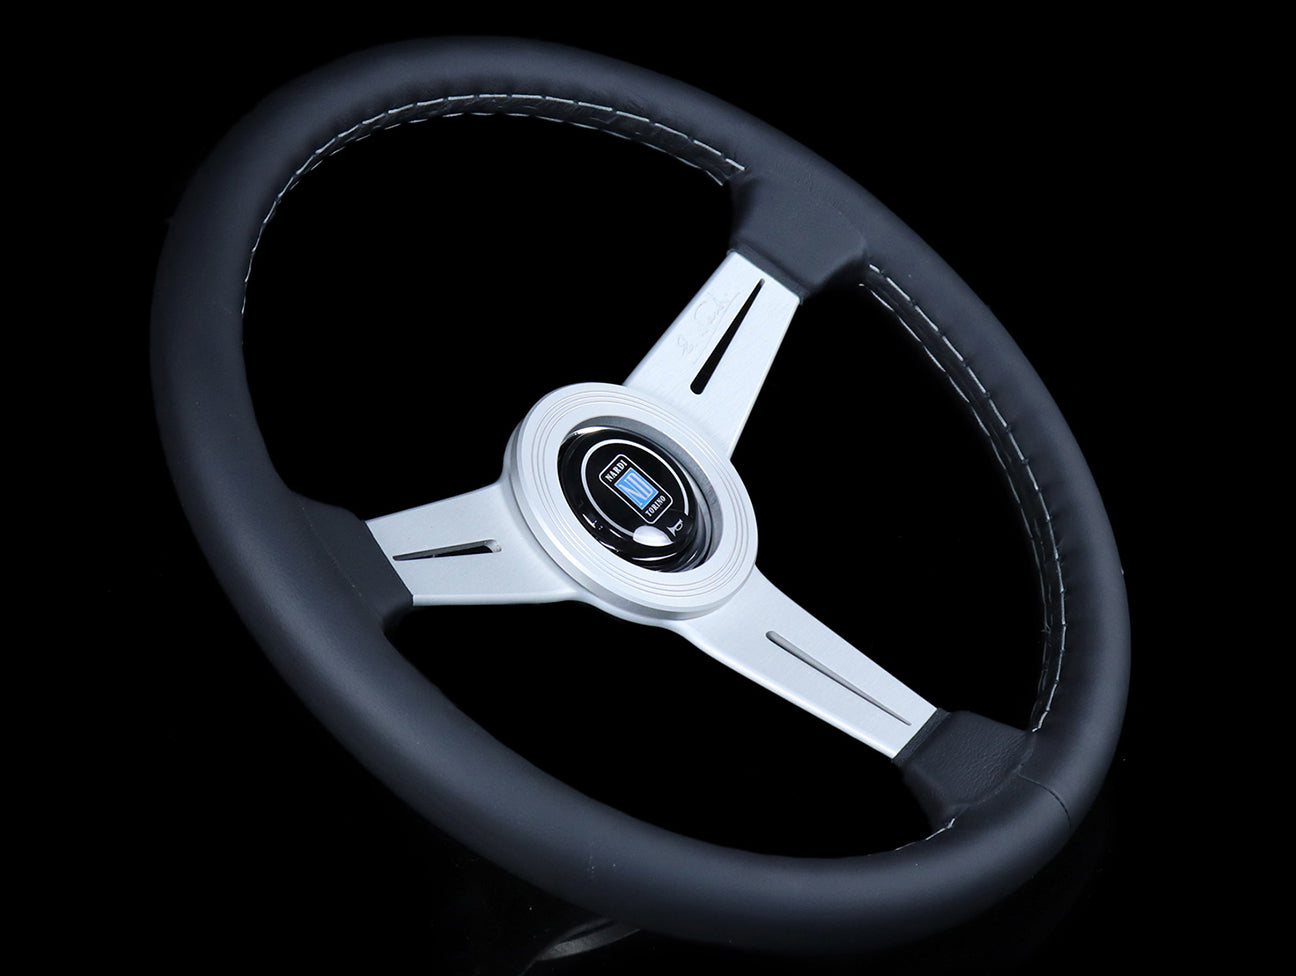 Nardi Classic 340mm Steering Wheel - Black Leather / Silver Spokes / Grey Stitch